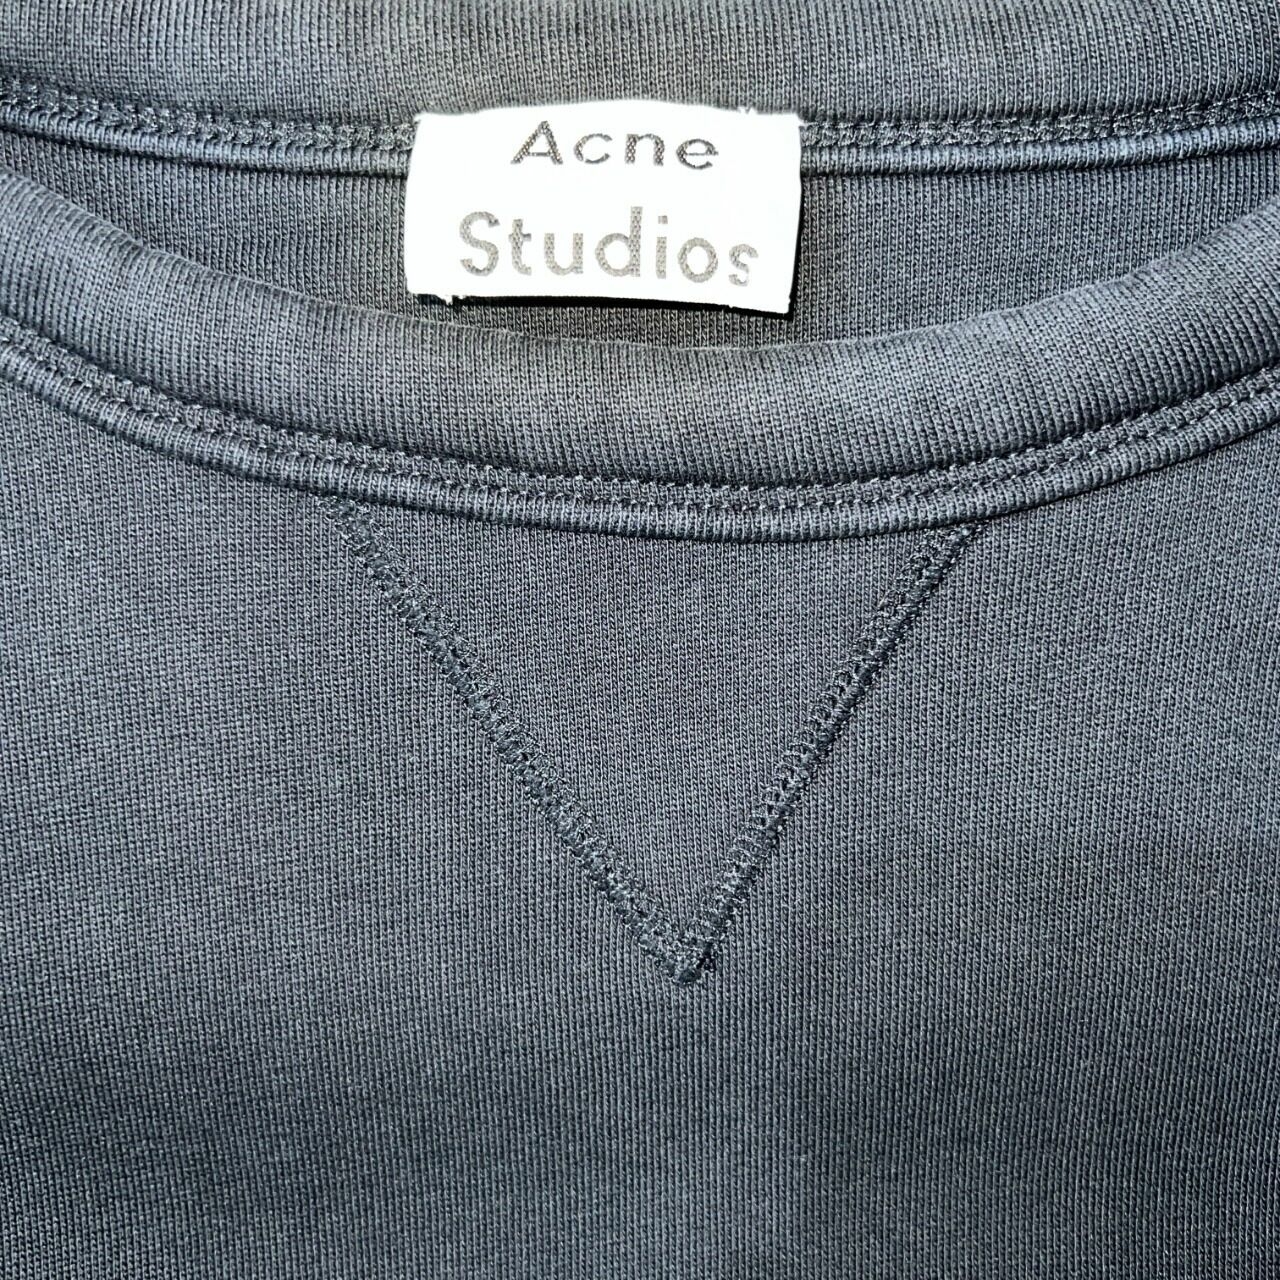 Acne Studios Black Sweater